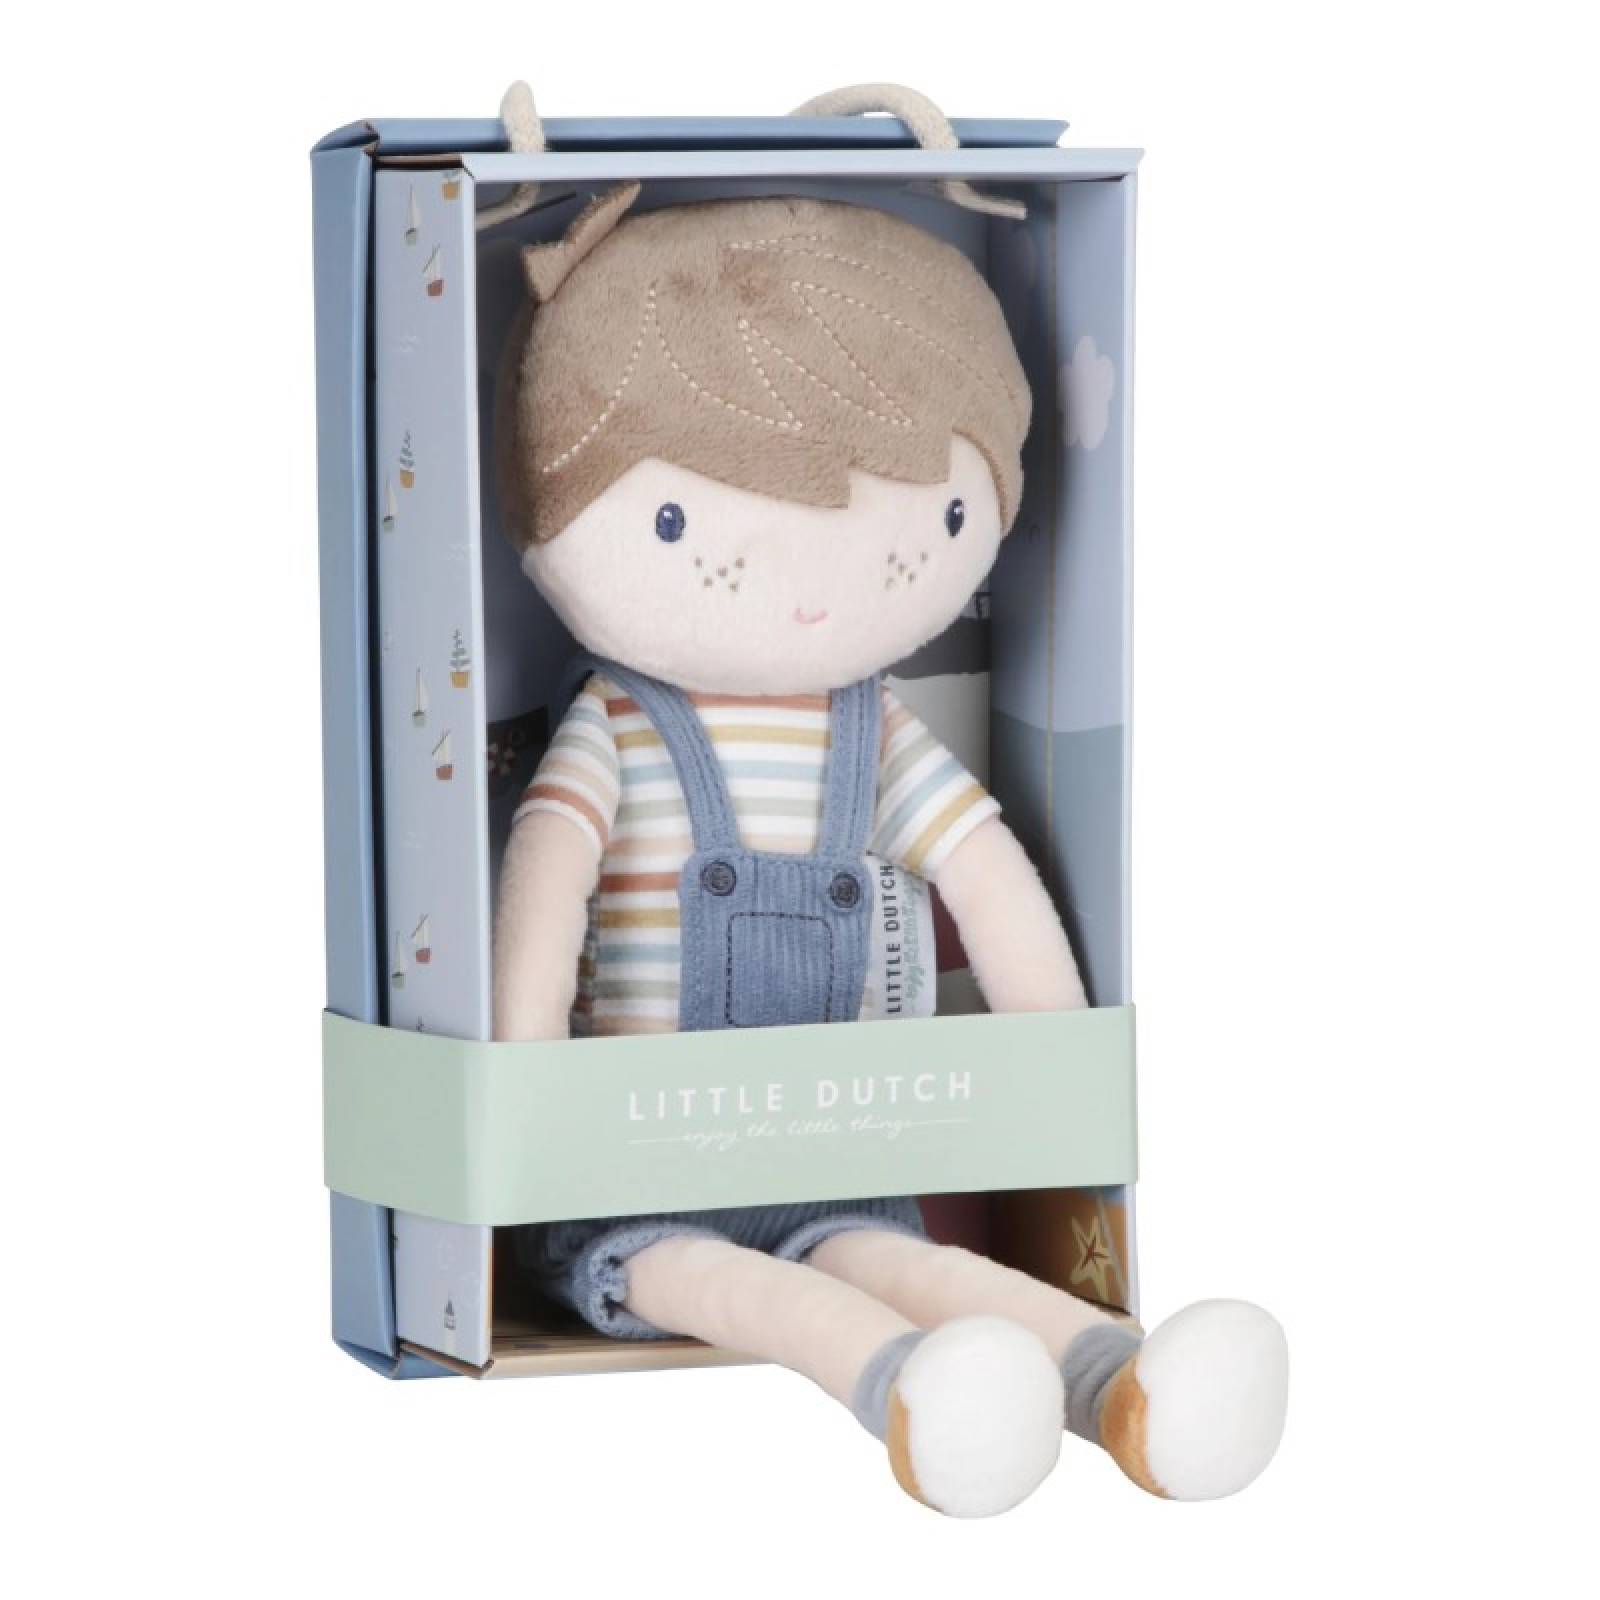 Jim - Medium Soft Cuddle Doll By Little Dutch 1+ thumbnails